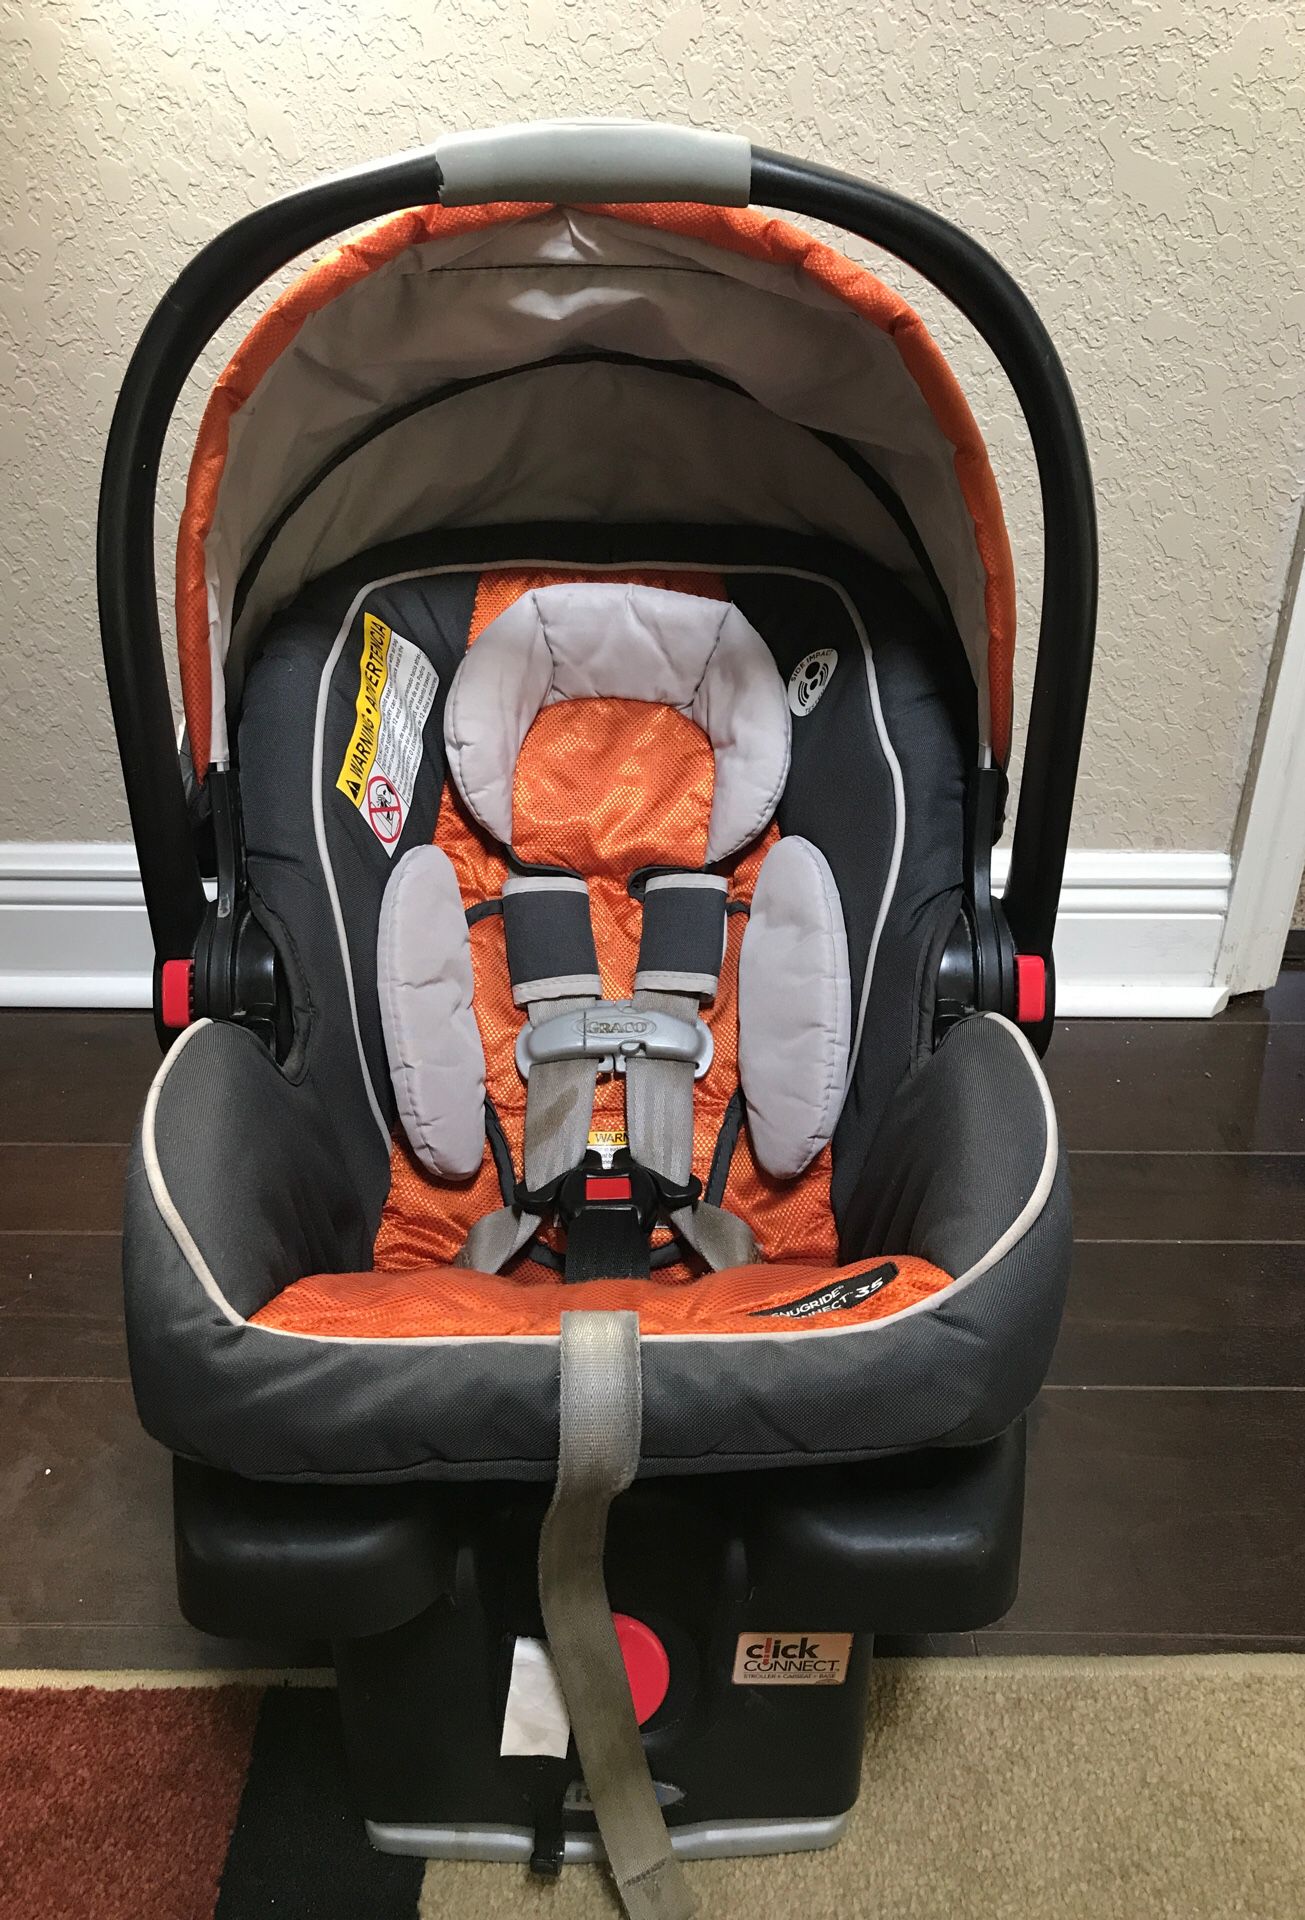 Graco SnugRide Click Connect 35 infant care seat